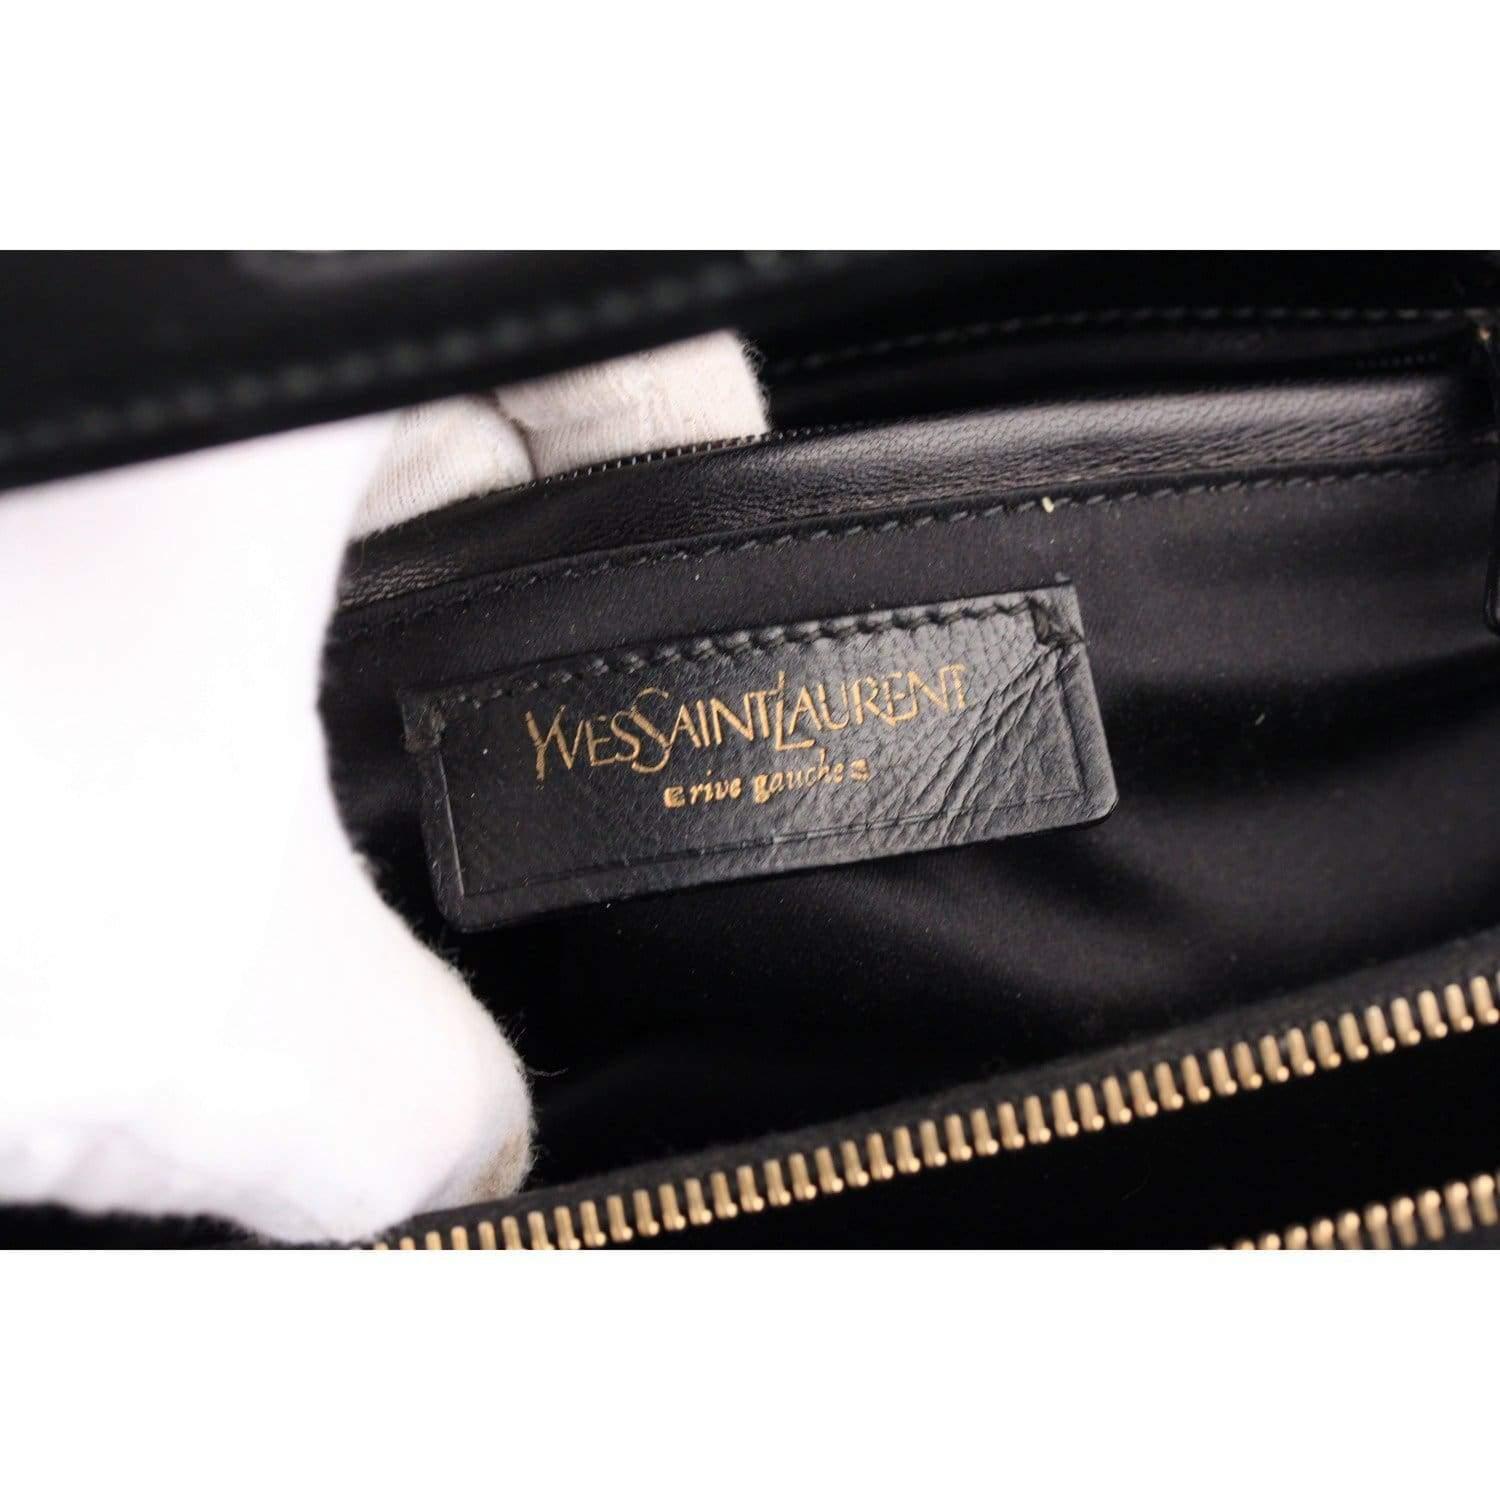 YVES SAINT LAURENT Black Patent Leather UPTOWN Bag HANDBAG Satchel 4